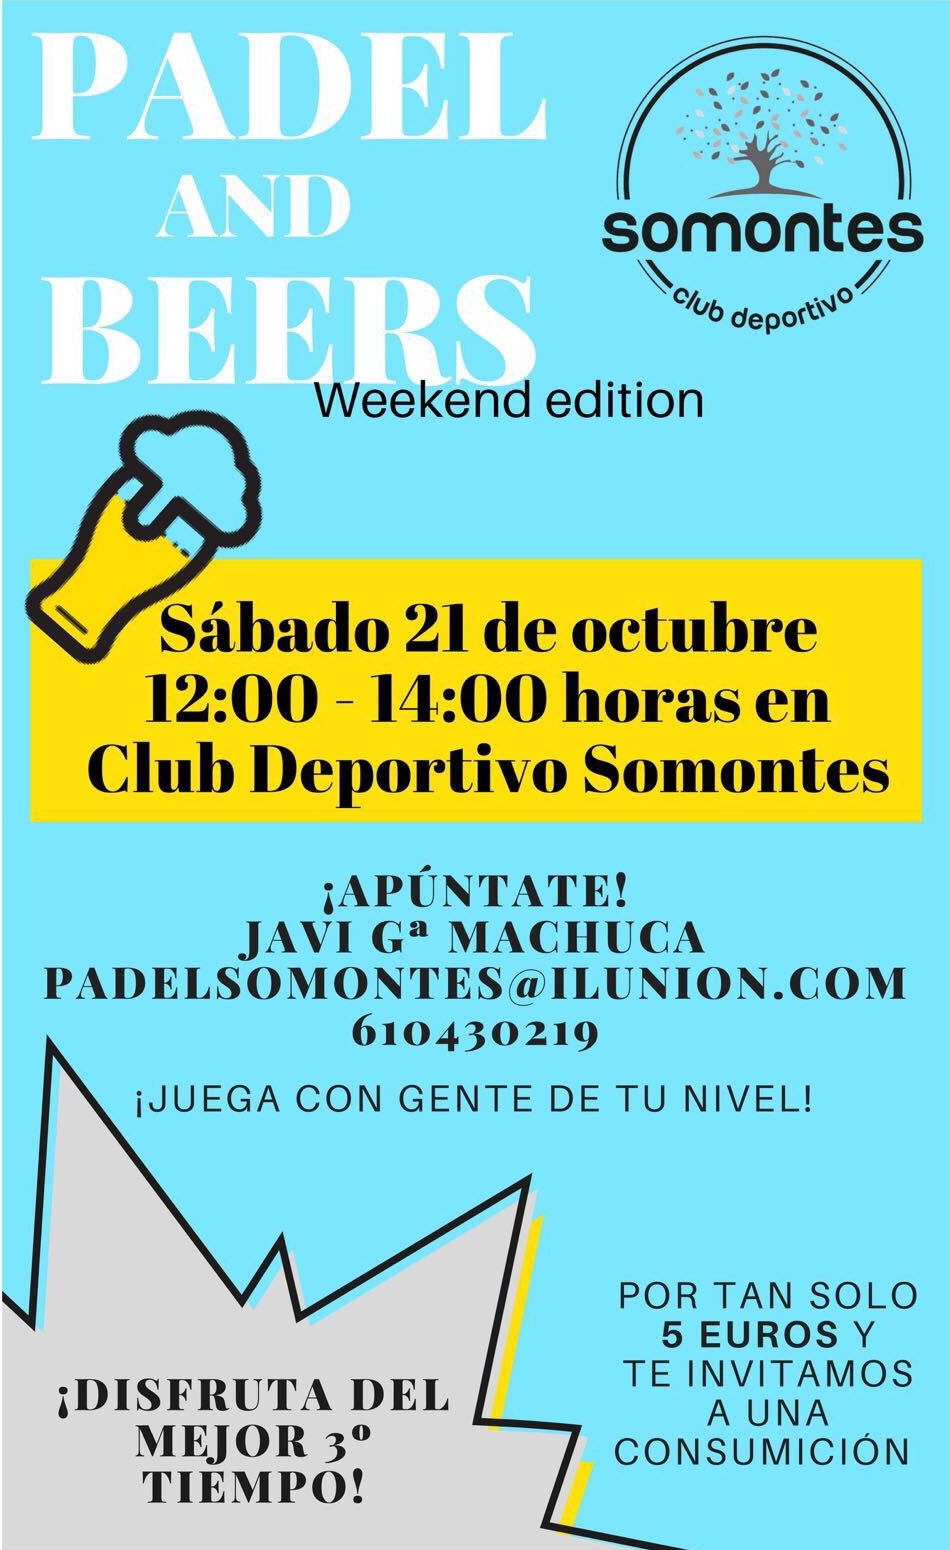 Torneo Somontes Padel & Beer octubre 2017